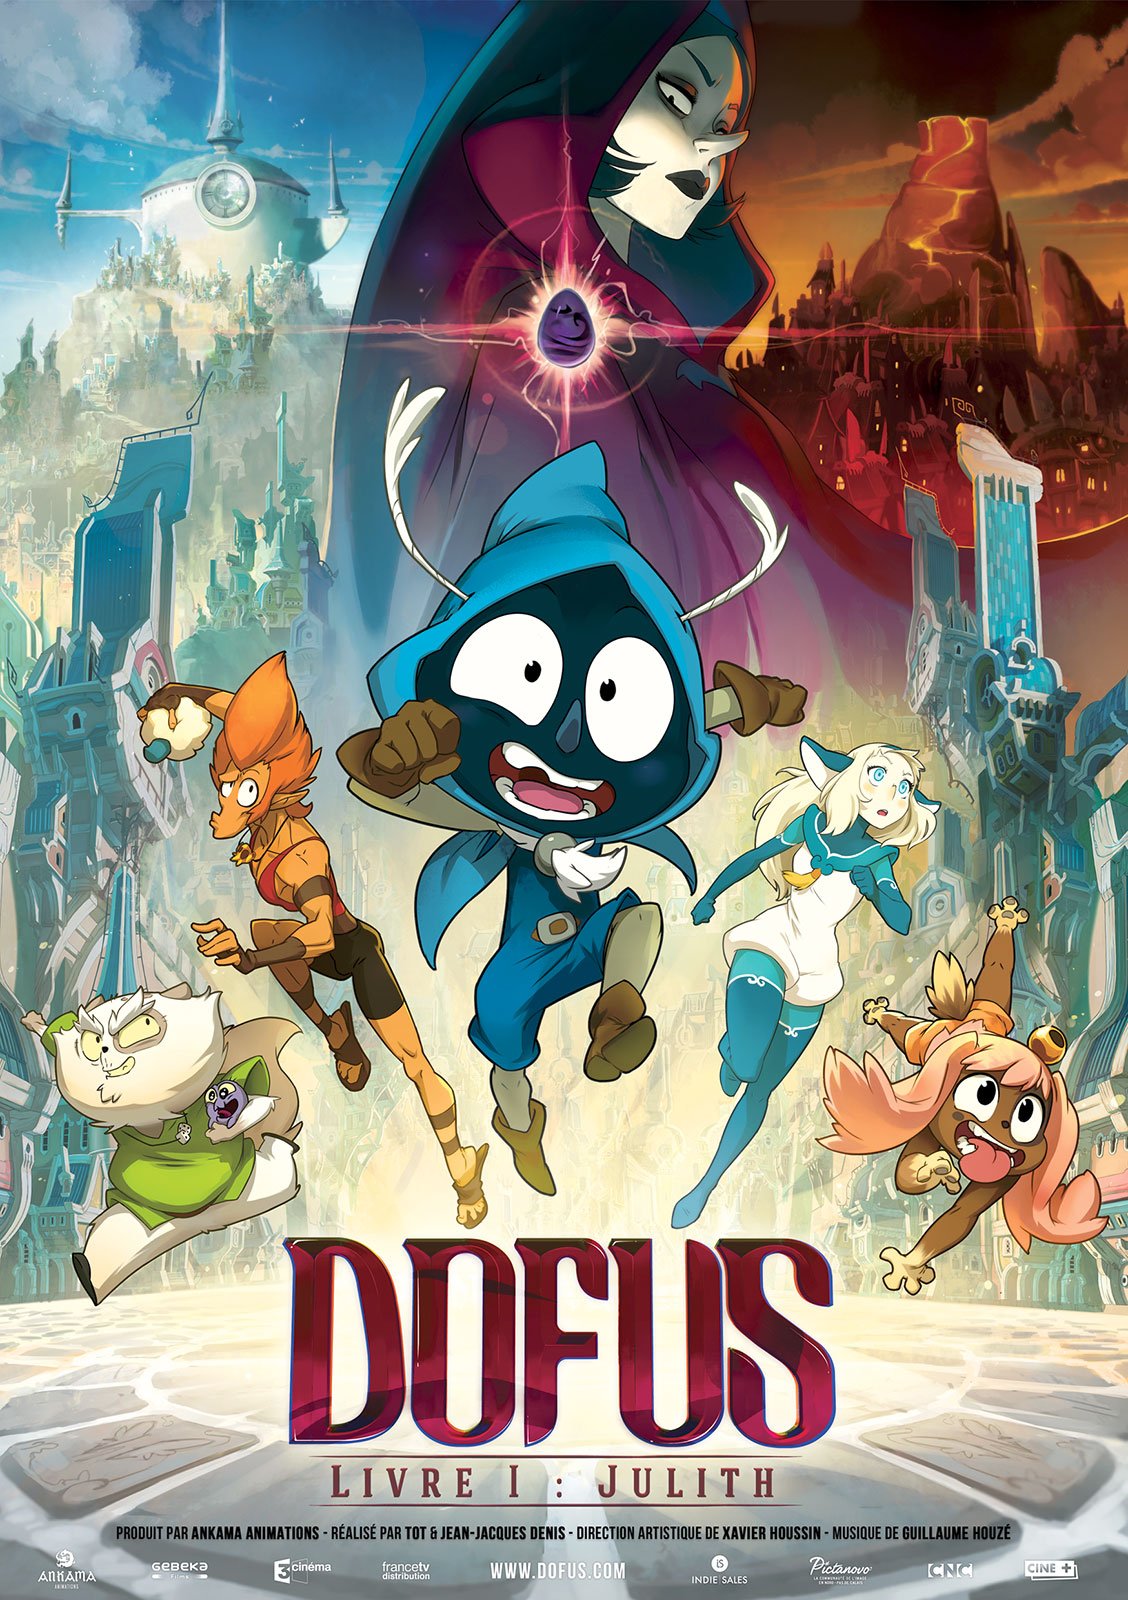 Poster of the movie Dofus - Livre 1: Julith